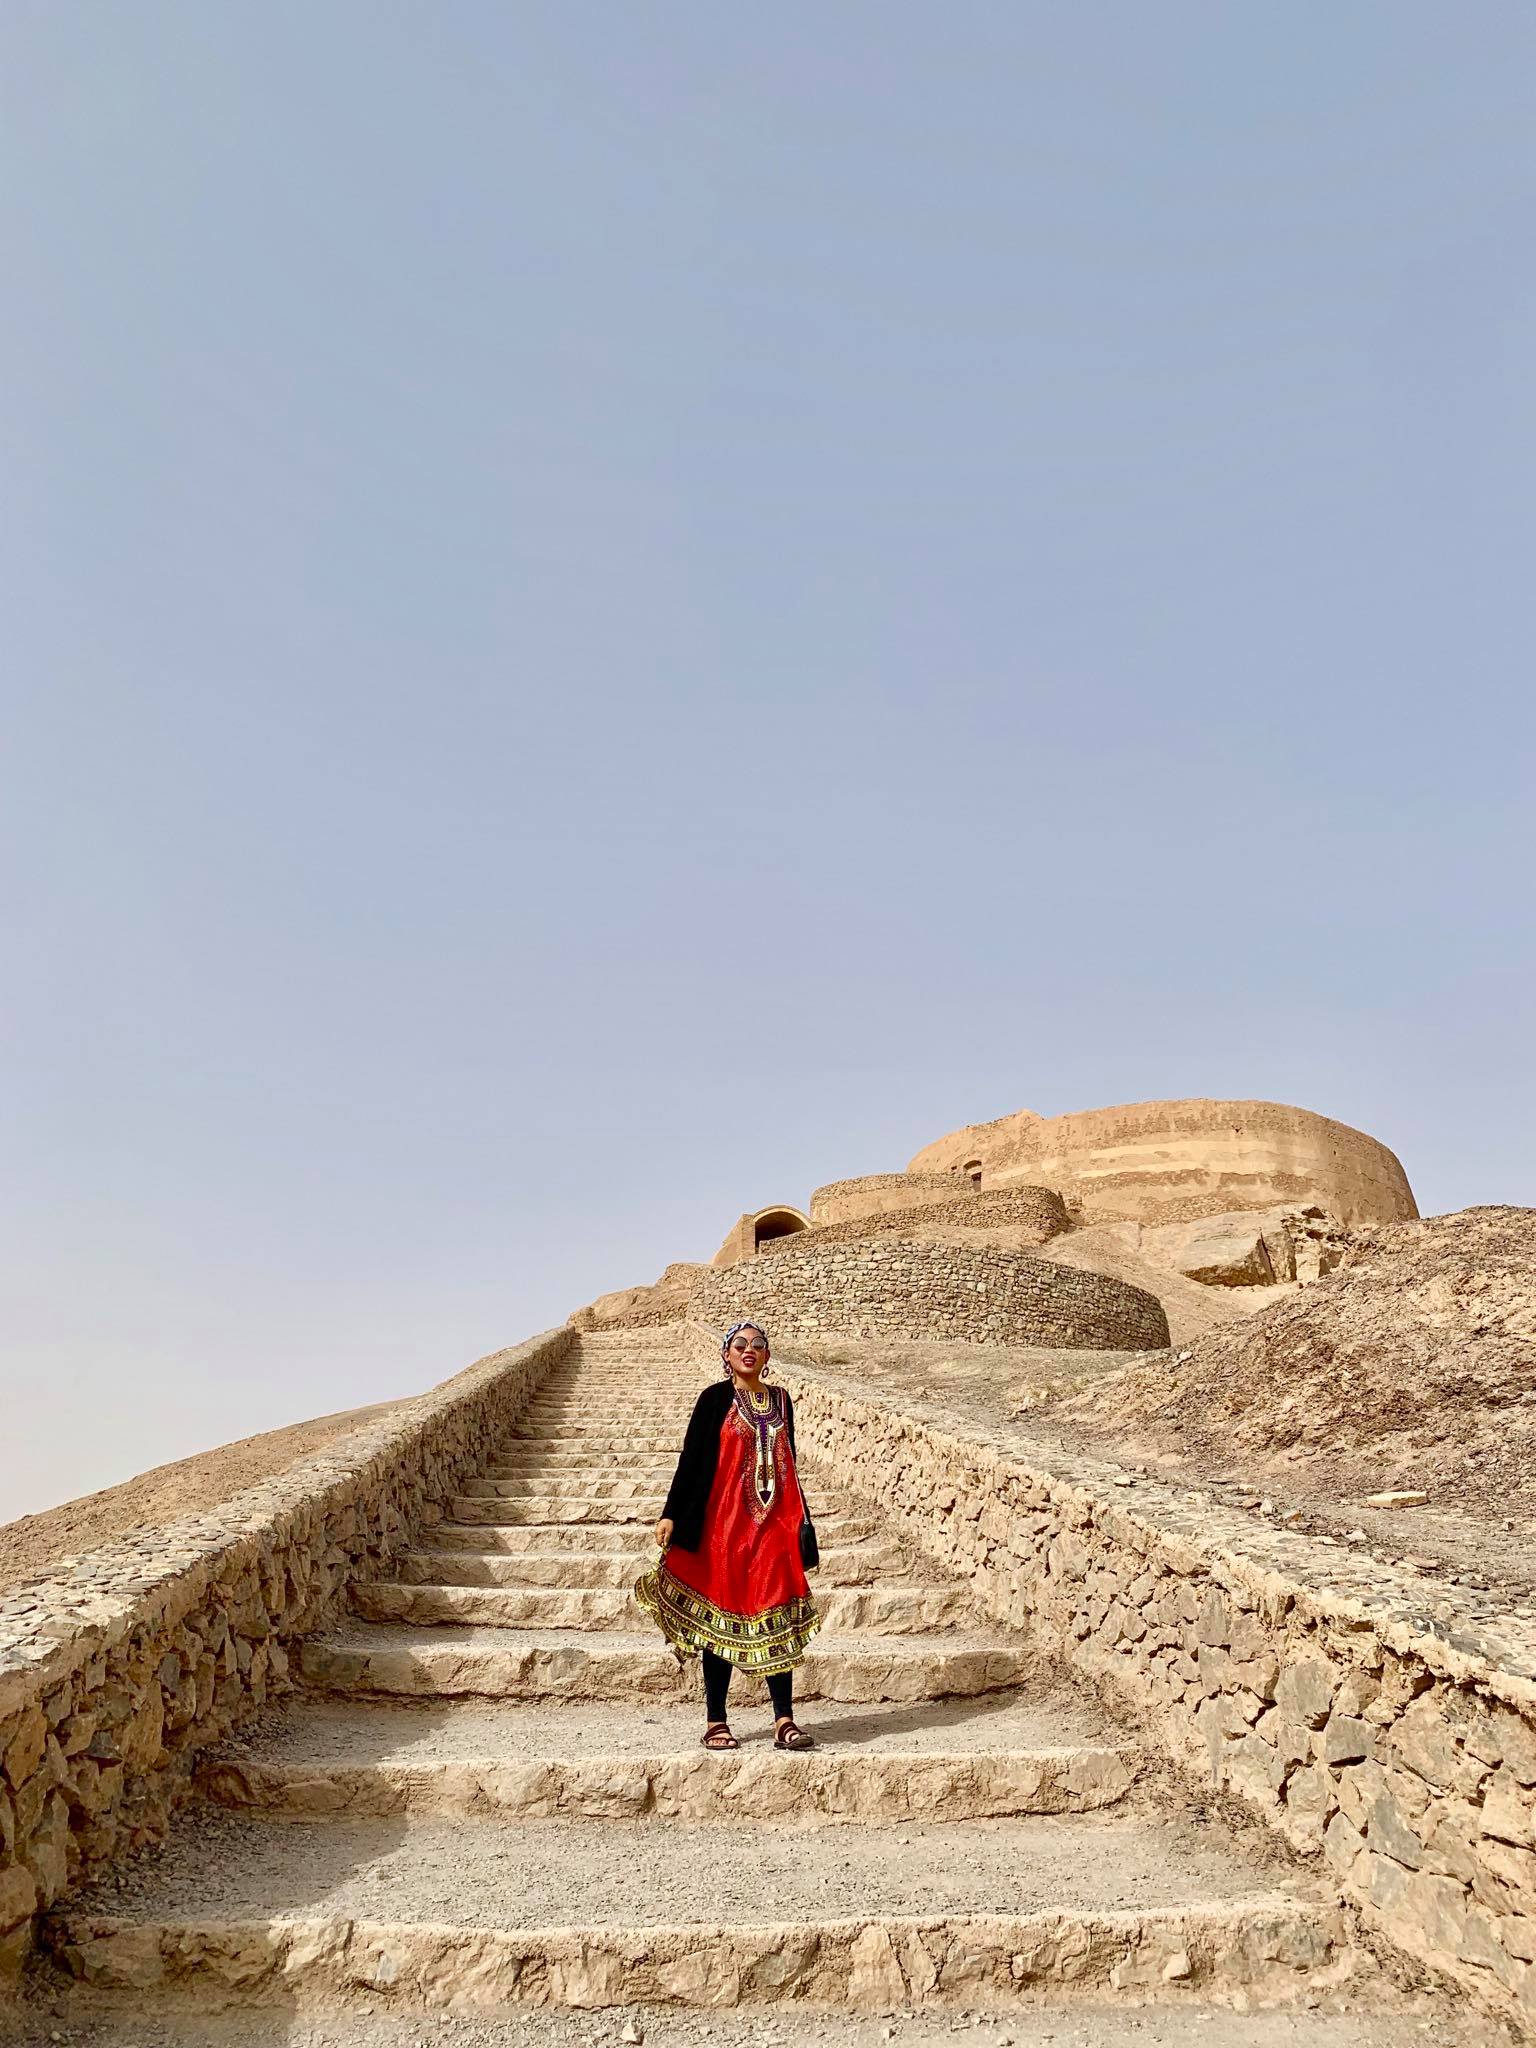 Kach Solo Travels in 2019 YAZD - the desert city in Iran11.jpg